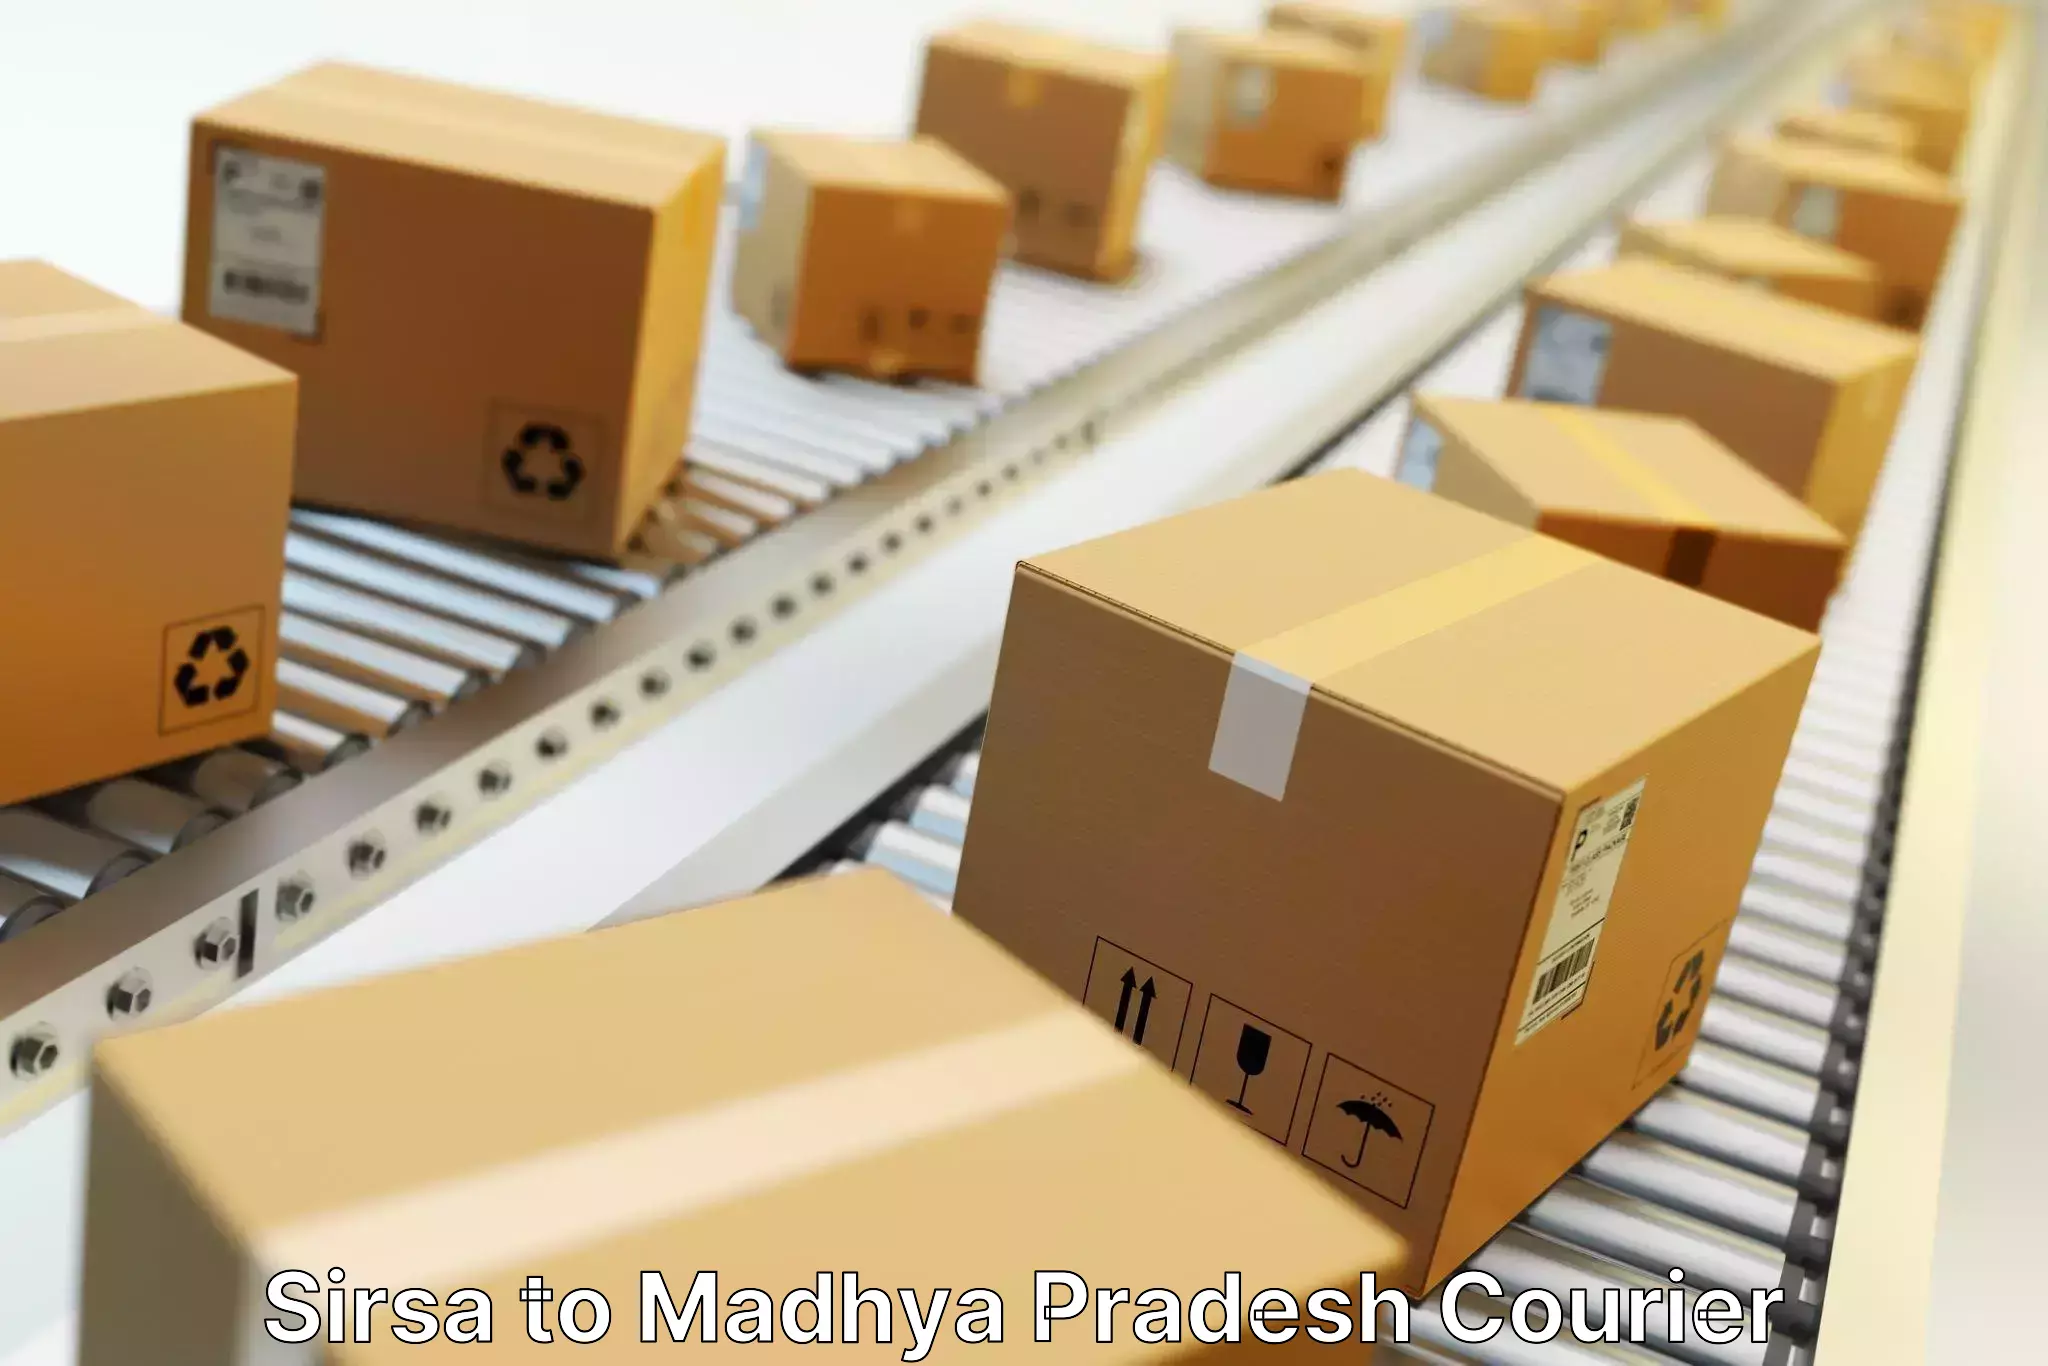 Modern courier technology Sirsa to Narsinghpur